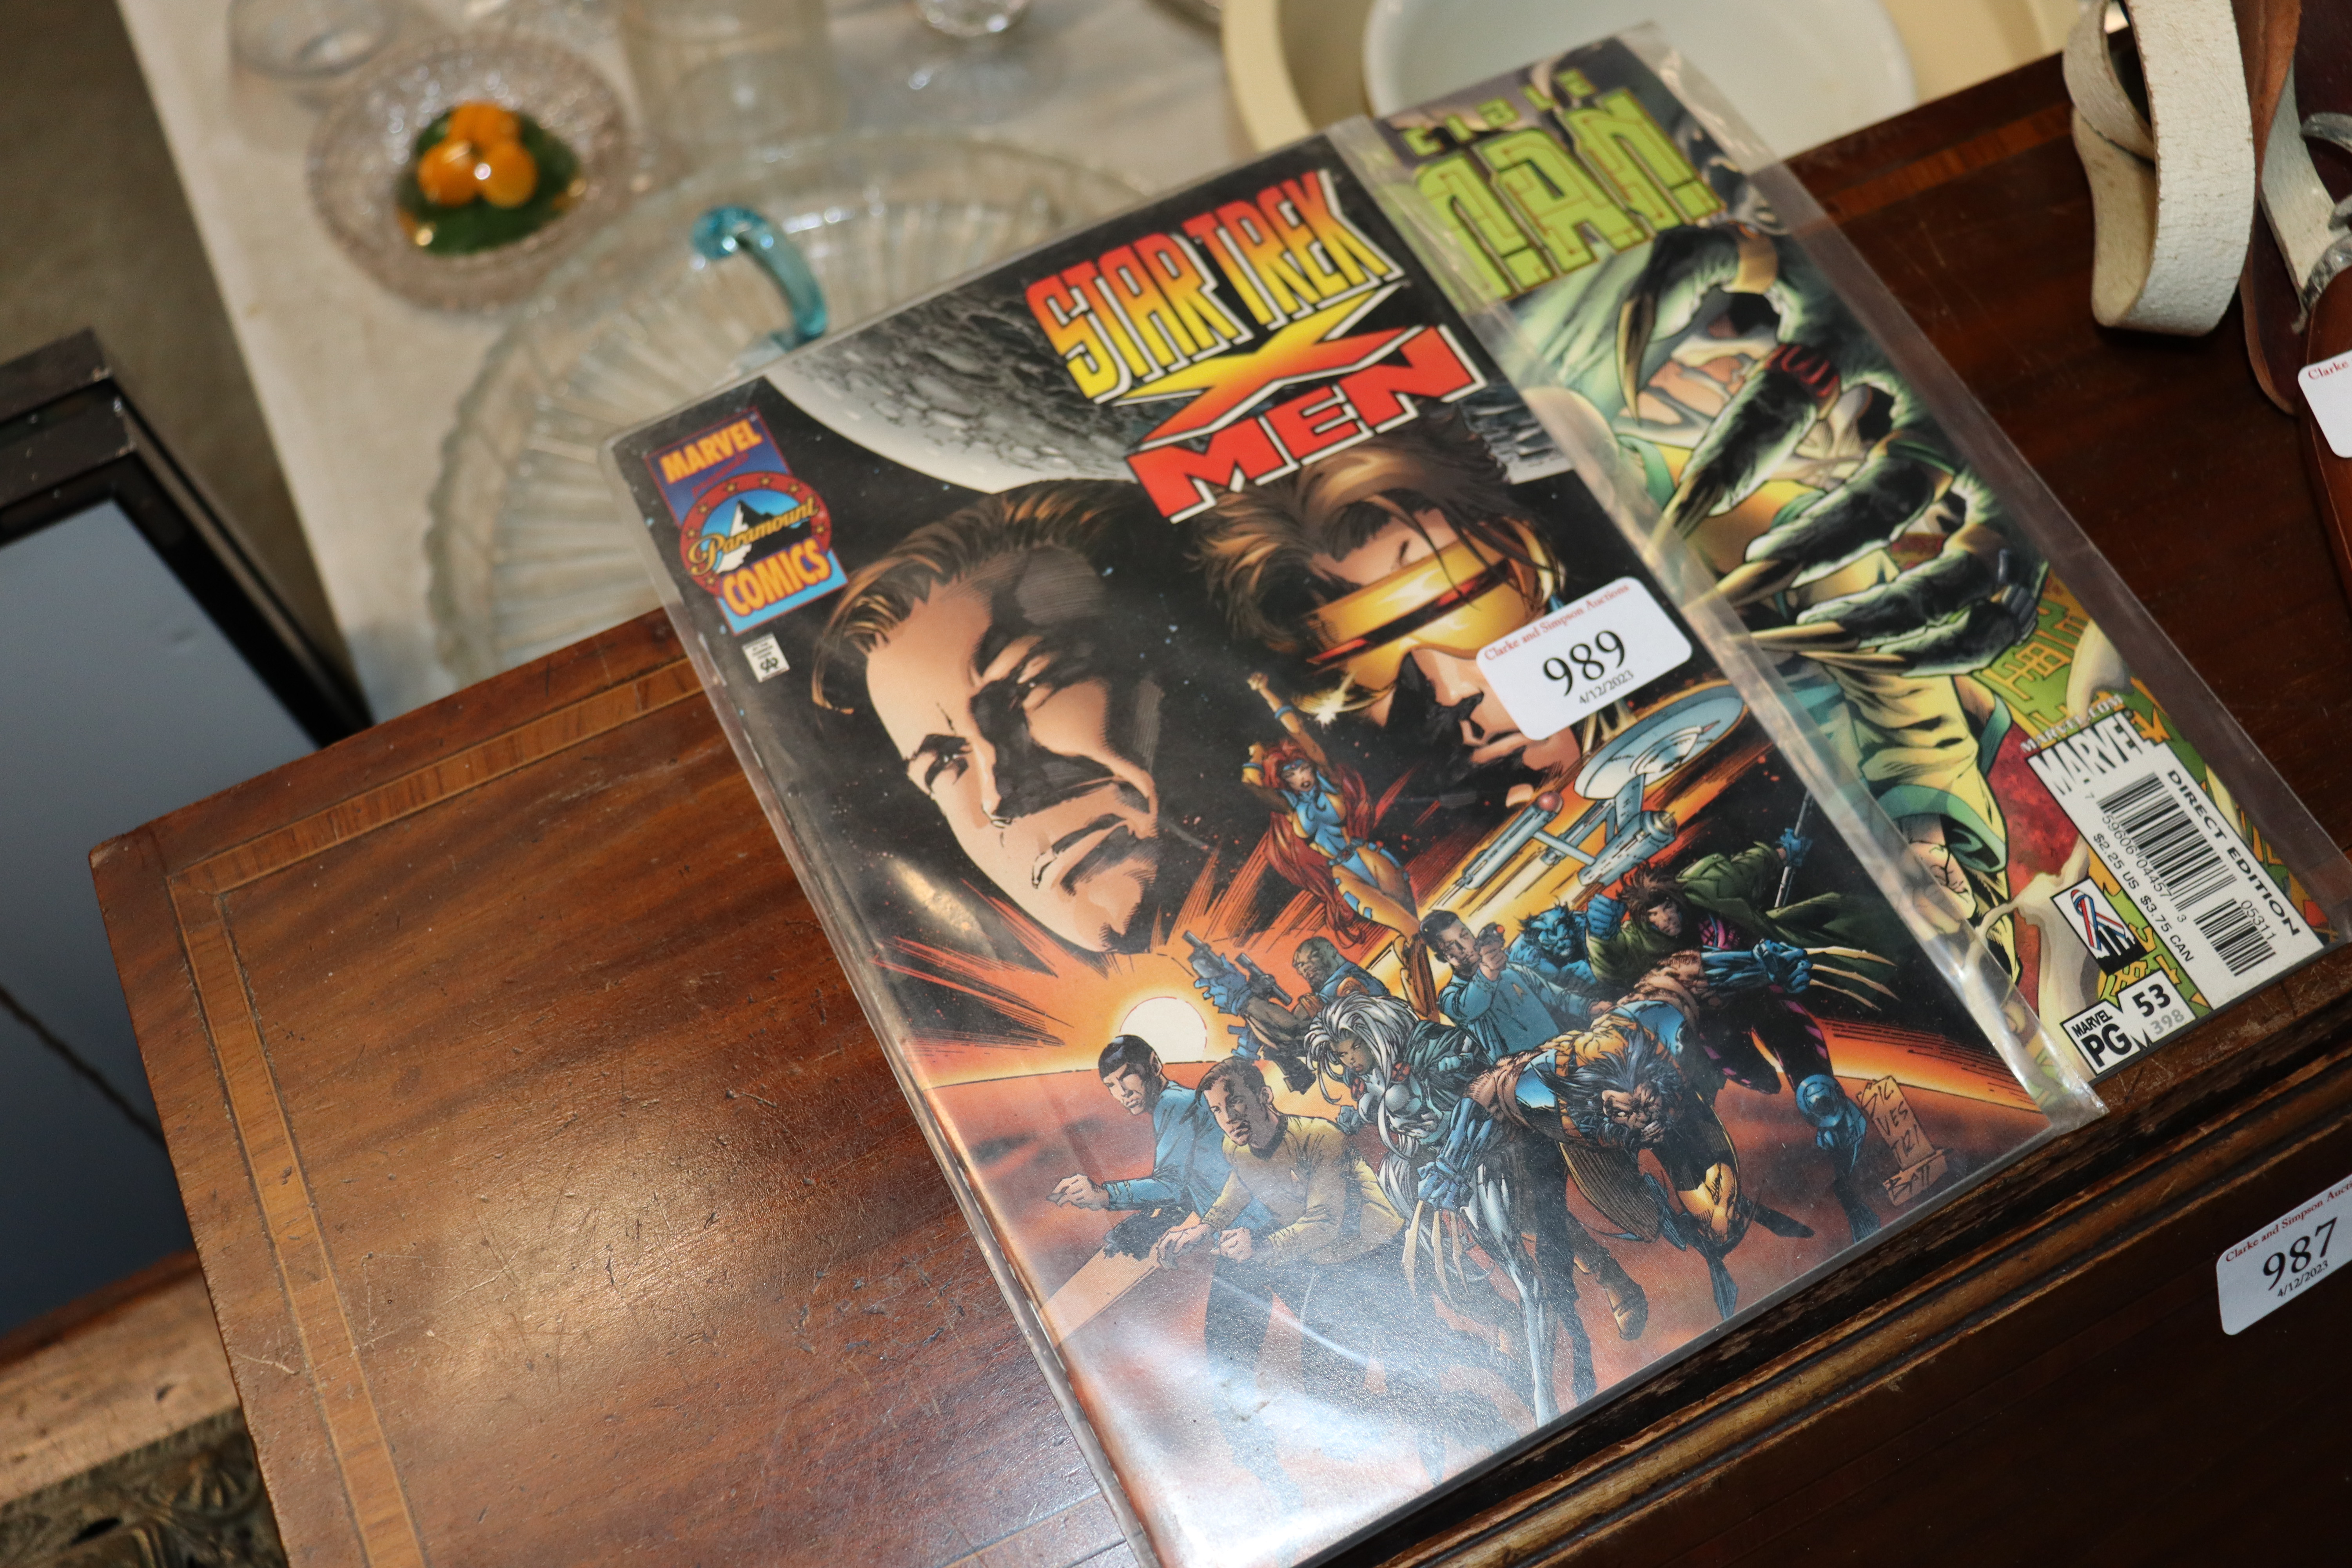 Three comic books: Nick Fury vs Shield, Star Trek - Image 2 of 3